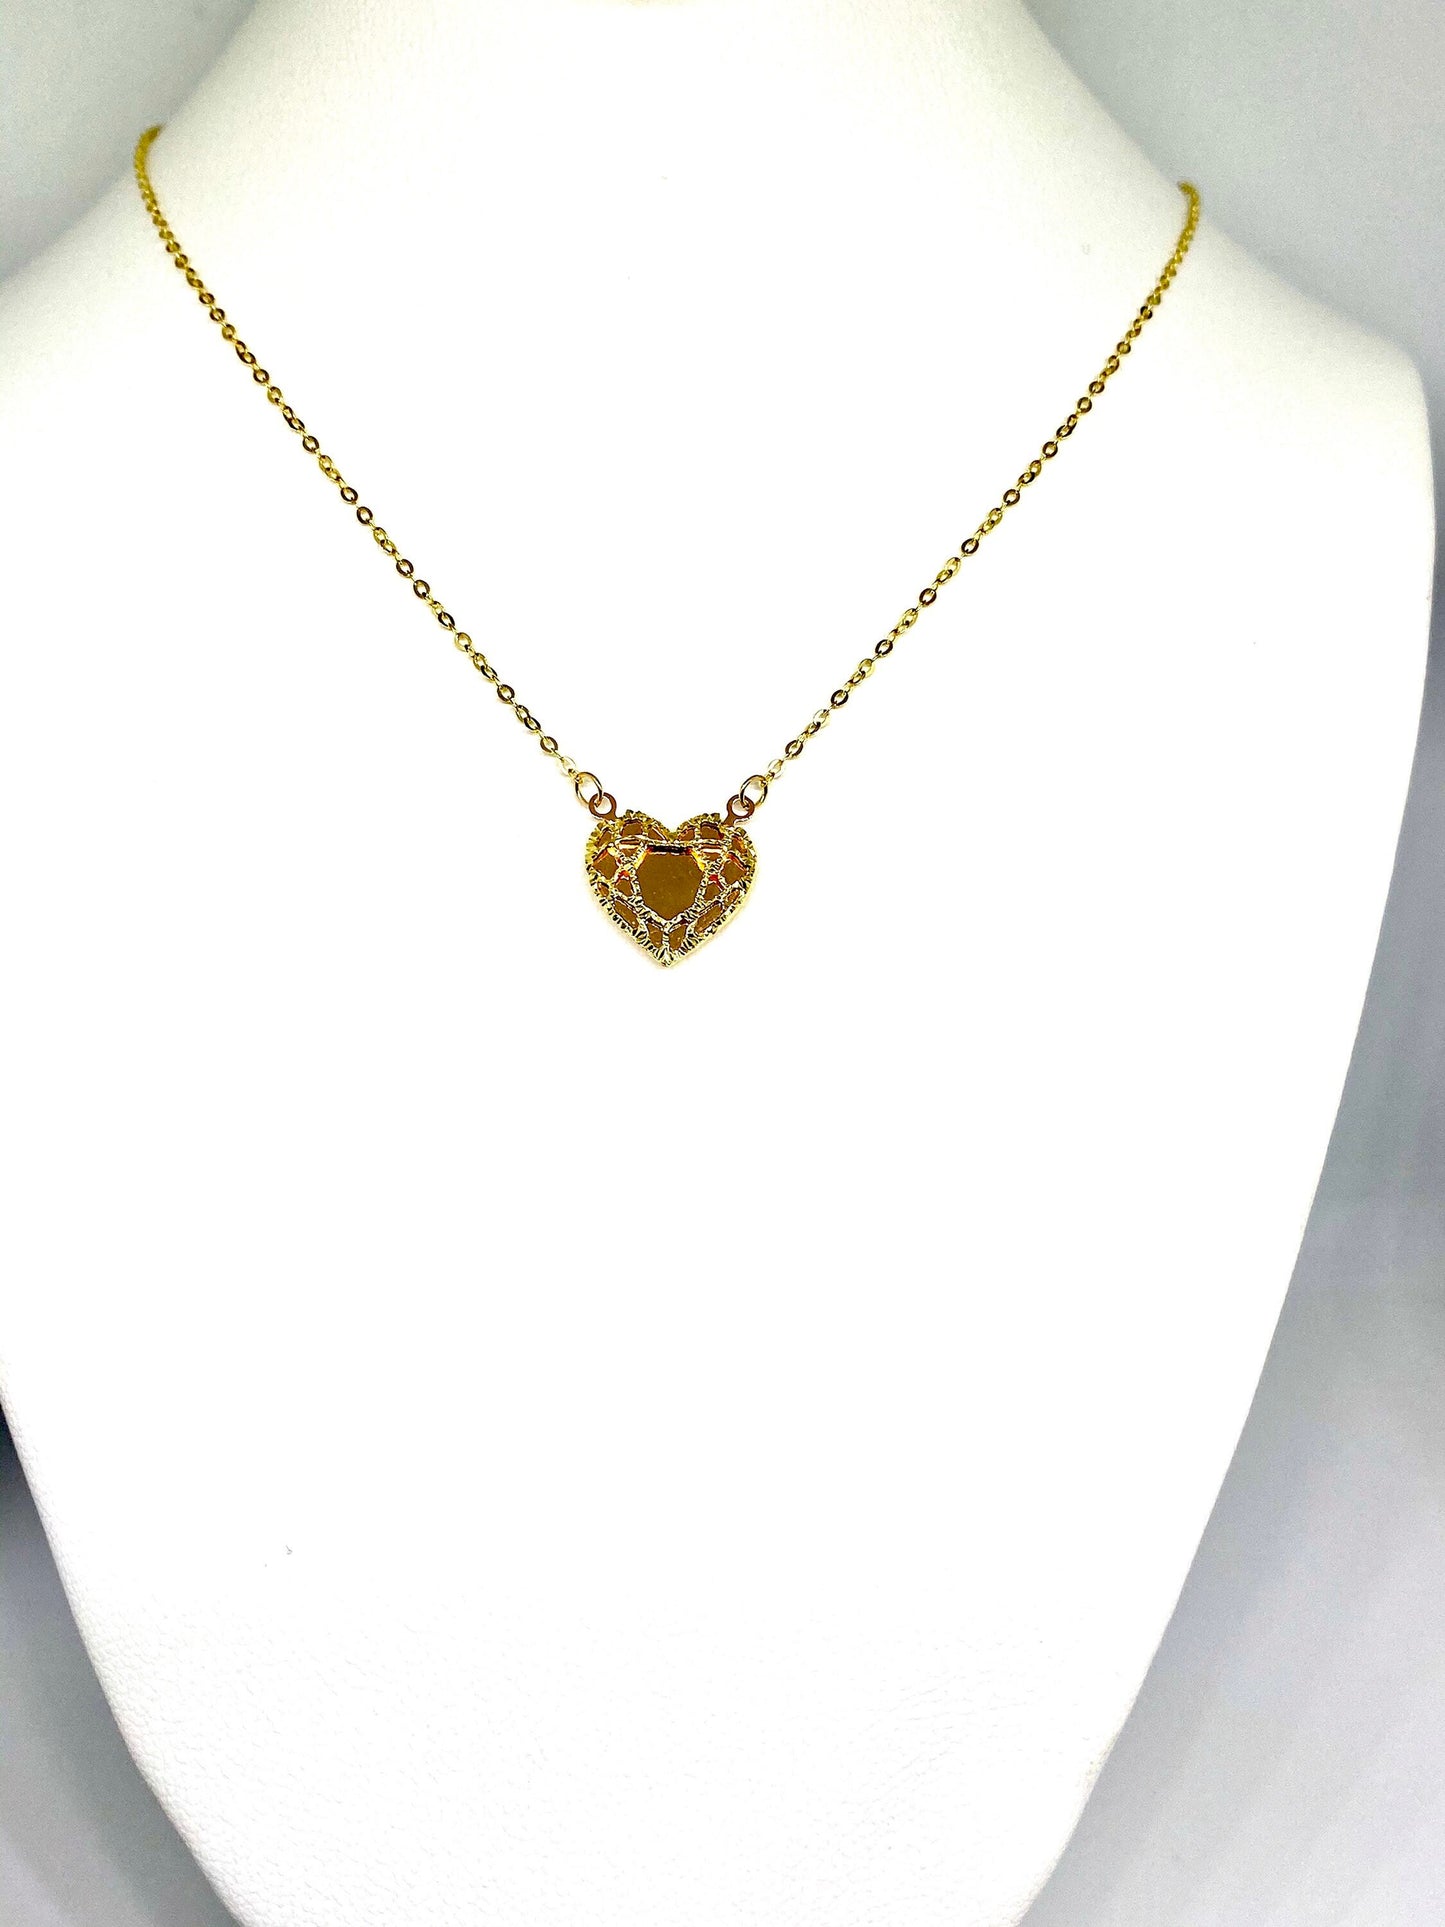 Yellow Gold High Polish Filigree Heart Pendant Chain Necklace